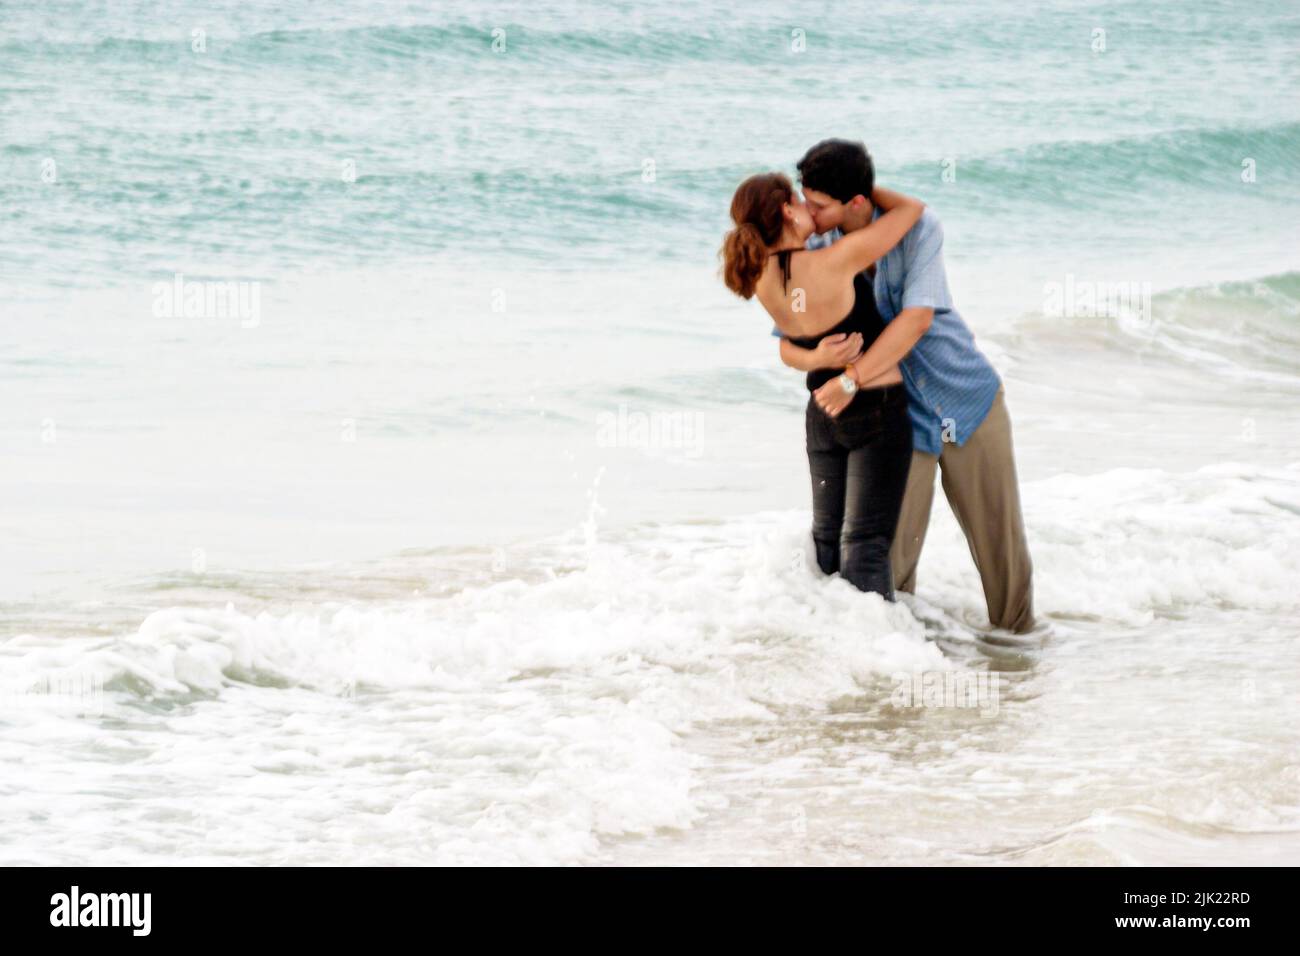 Miami Beach Florida, Atlantic Ocean Shore costa costa costa costa mar, joven romántico pareja adultos hombre mujer surf abrazando besos Foto de stock